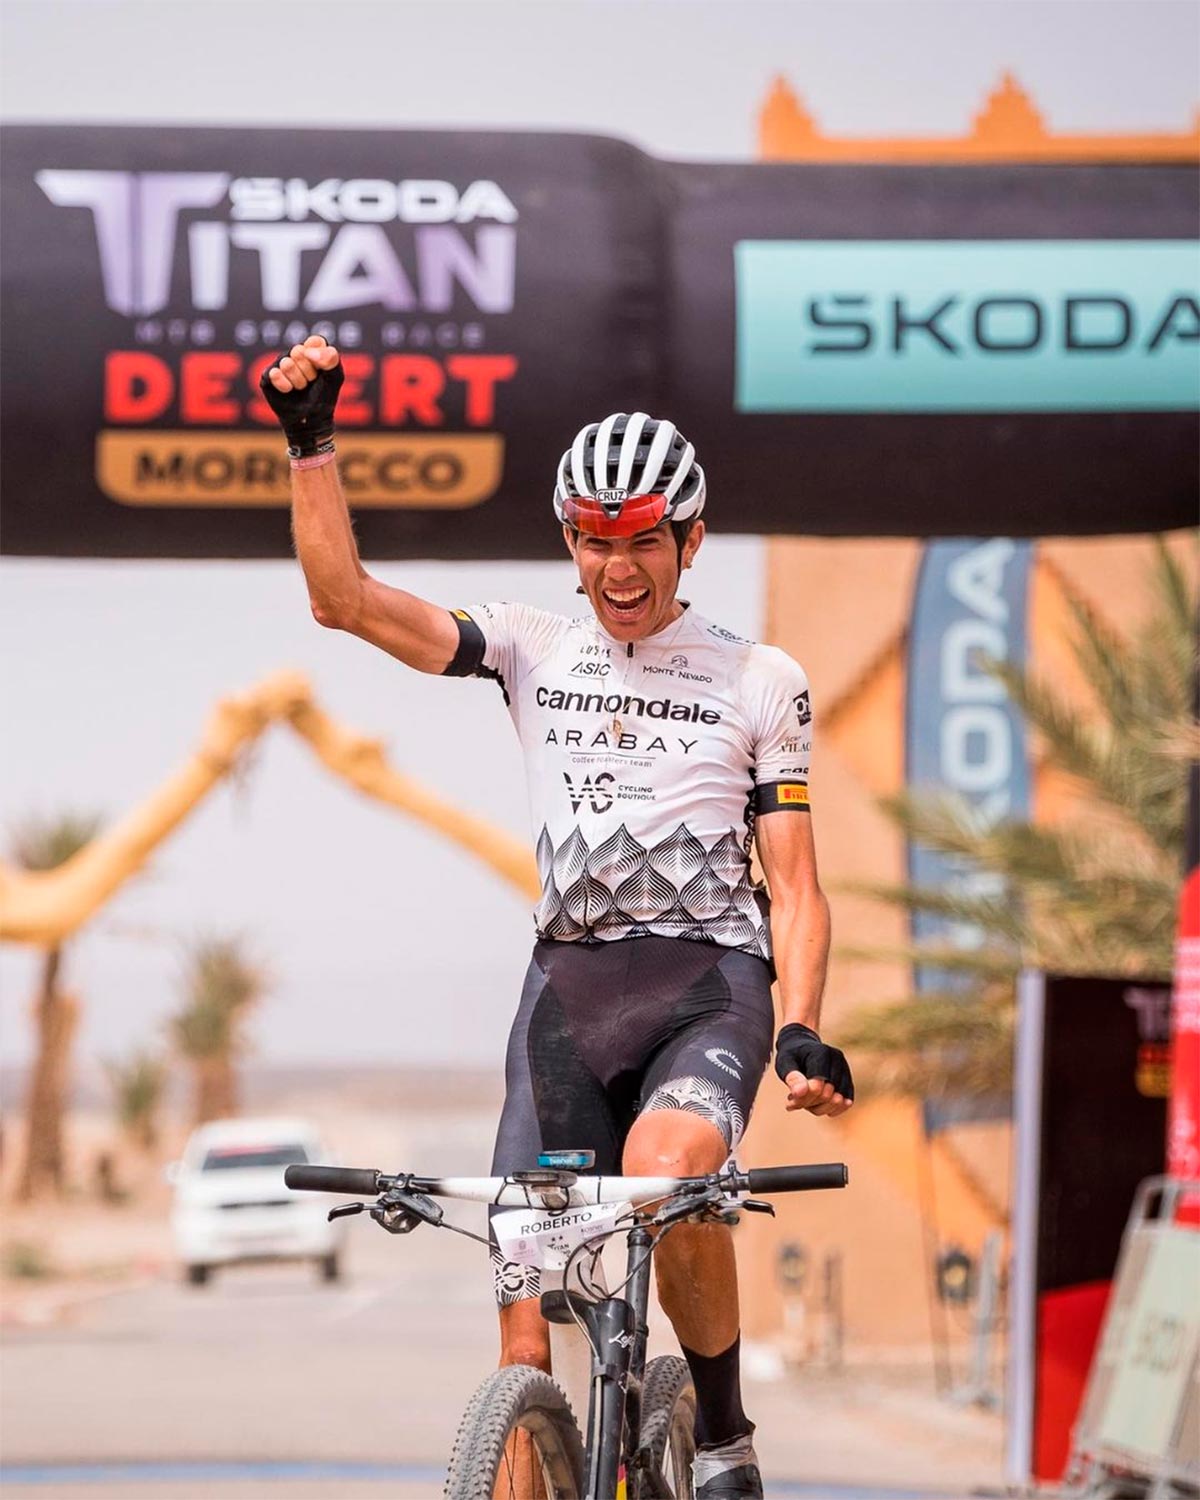 Titan Desert Morocco 2023: Roberto Bou y Tessa Kortekaas ganan la quinta etapa y pasan a liderar la general